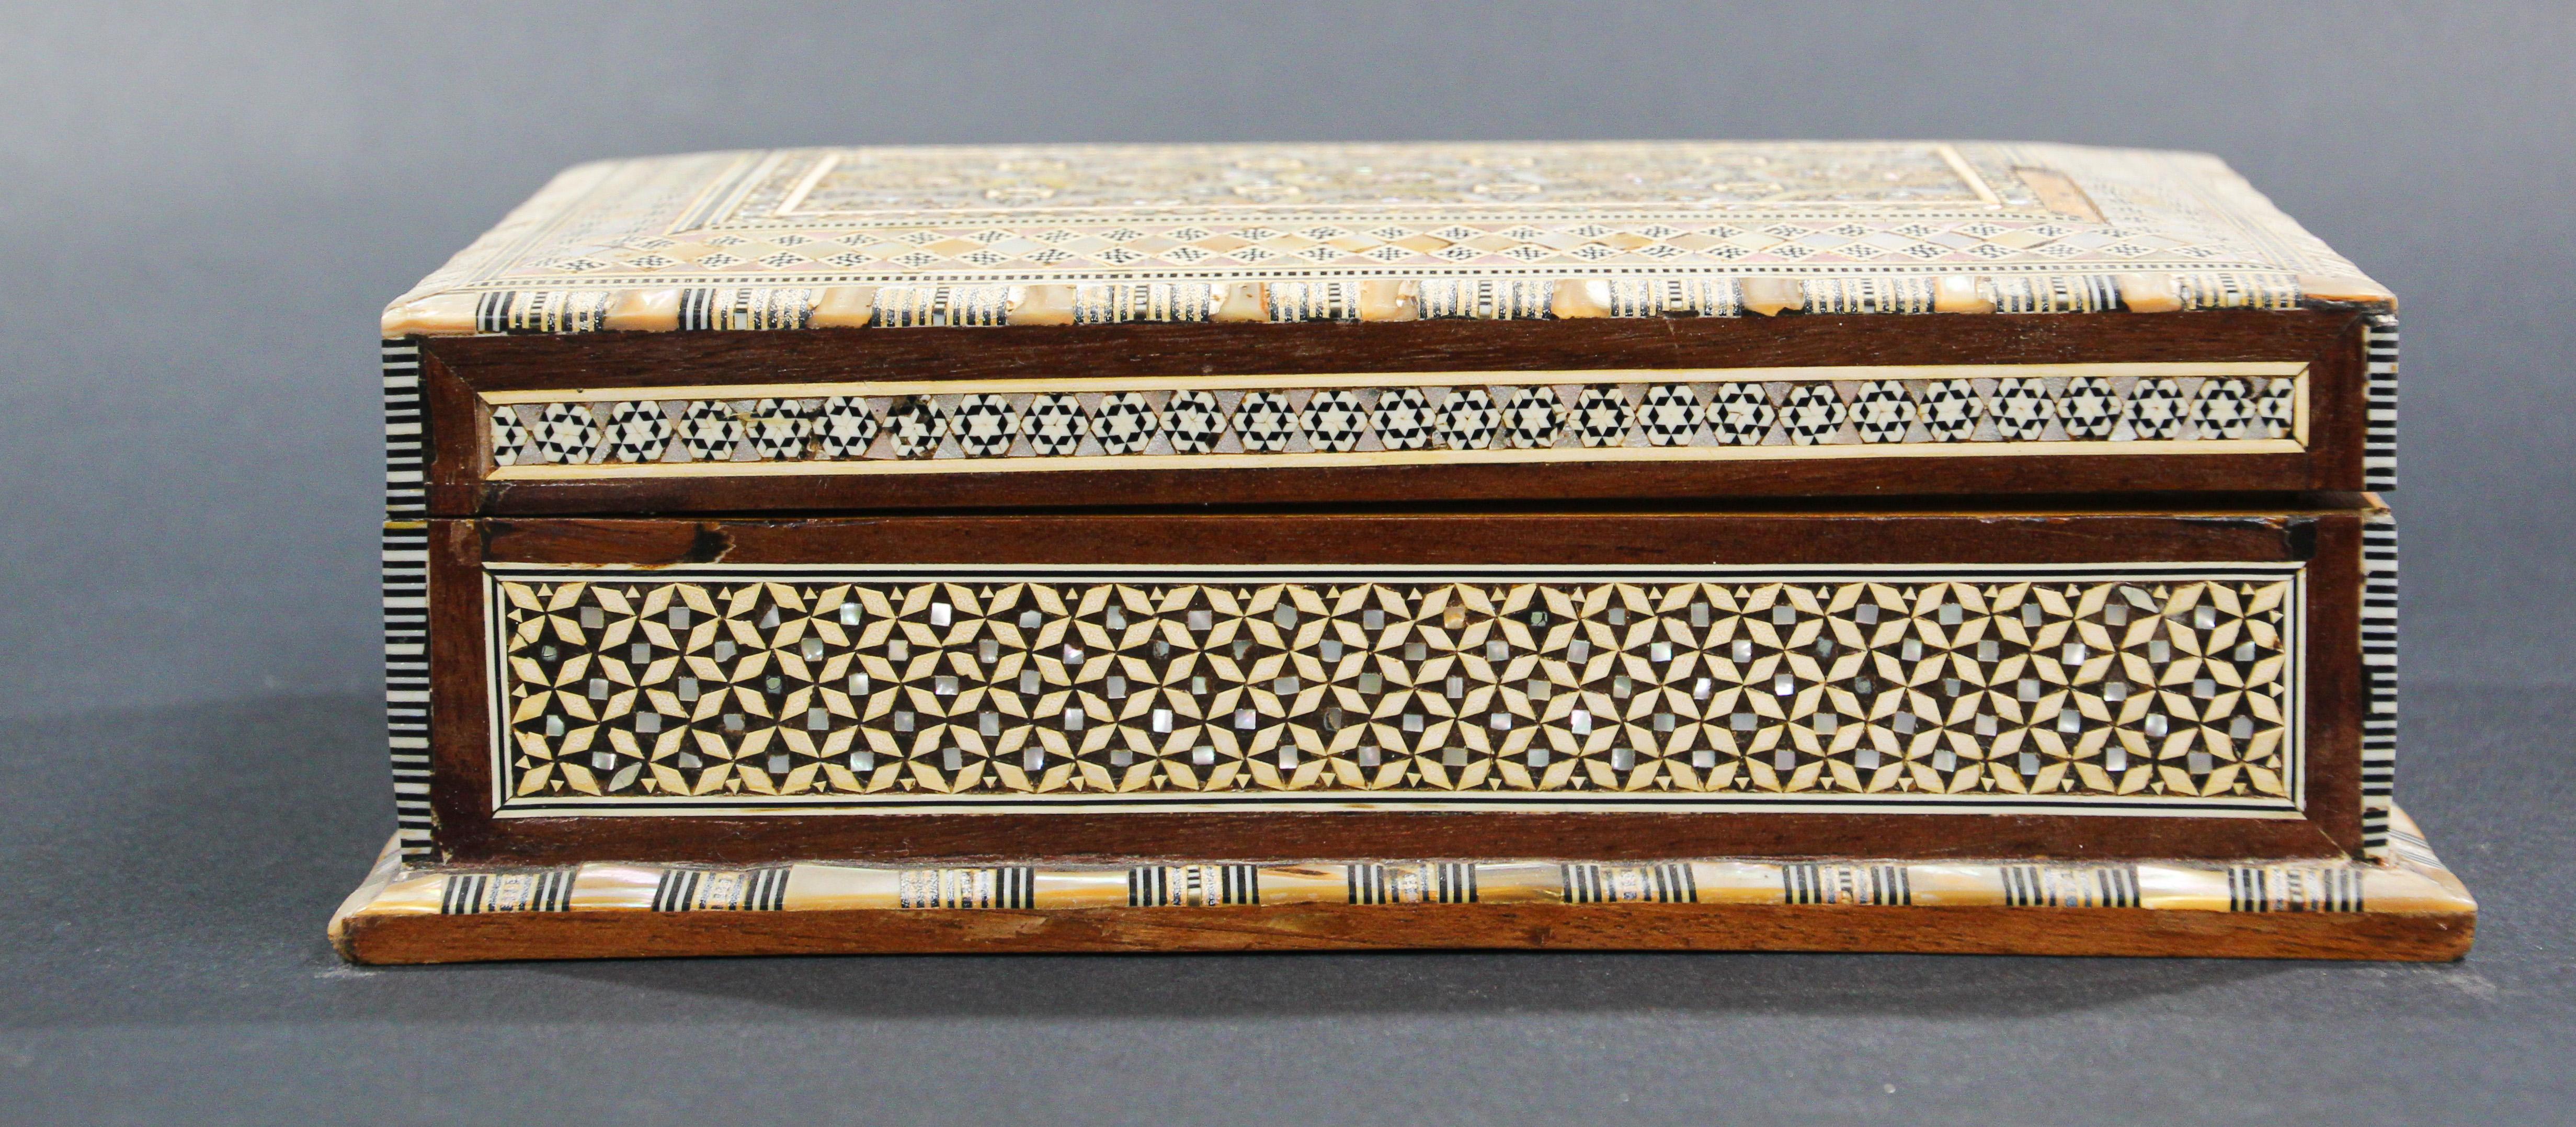 Inlay Moorish Handcrafted Middle Eastern Mosaic Shell Inlaid Decorative Jewelry Box